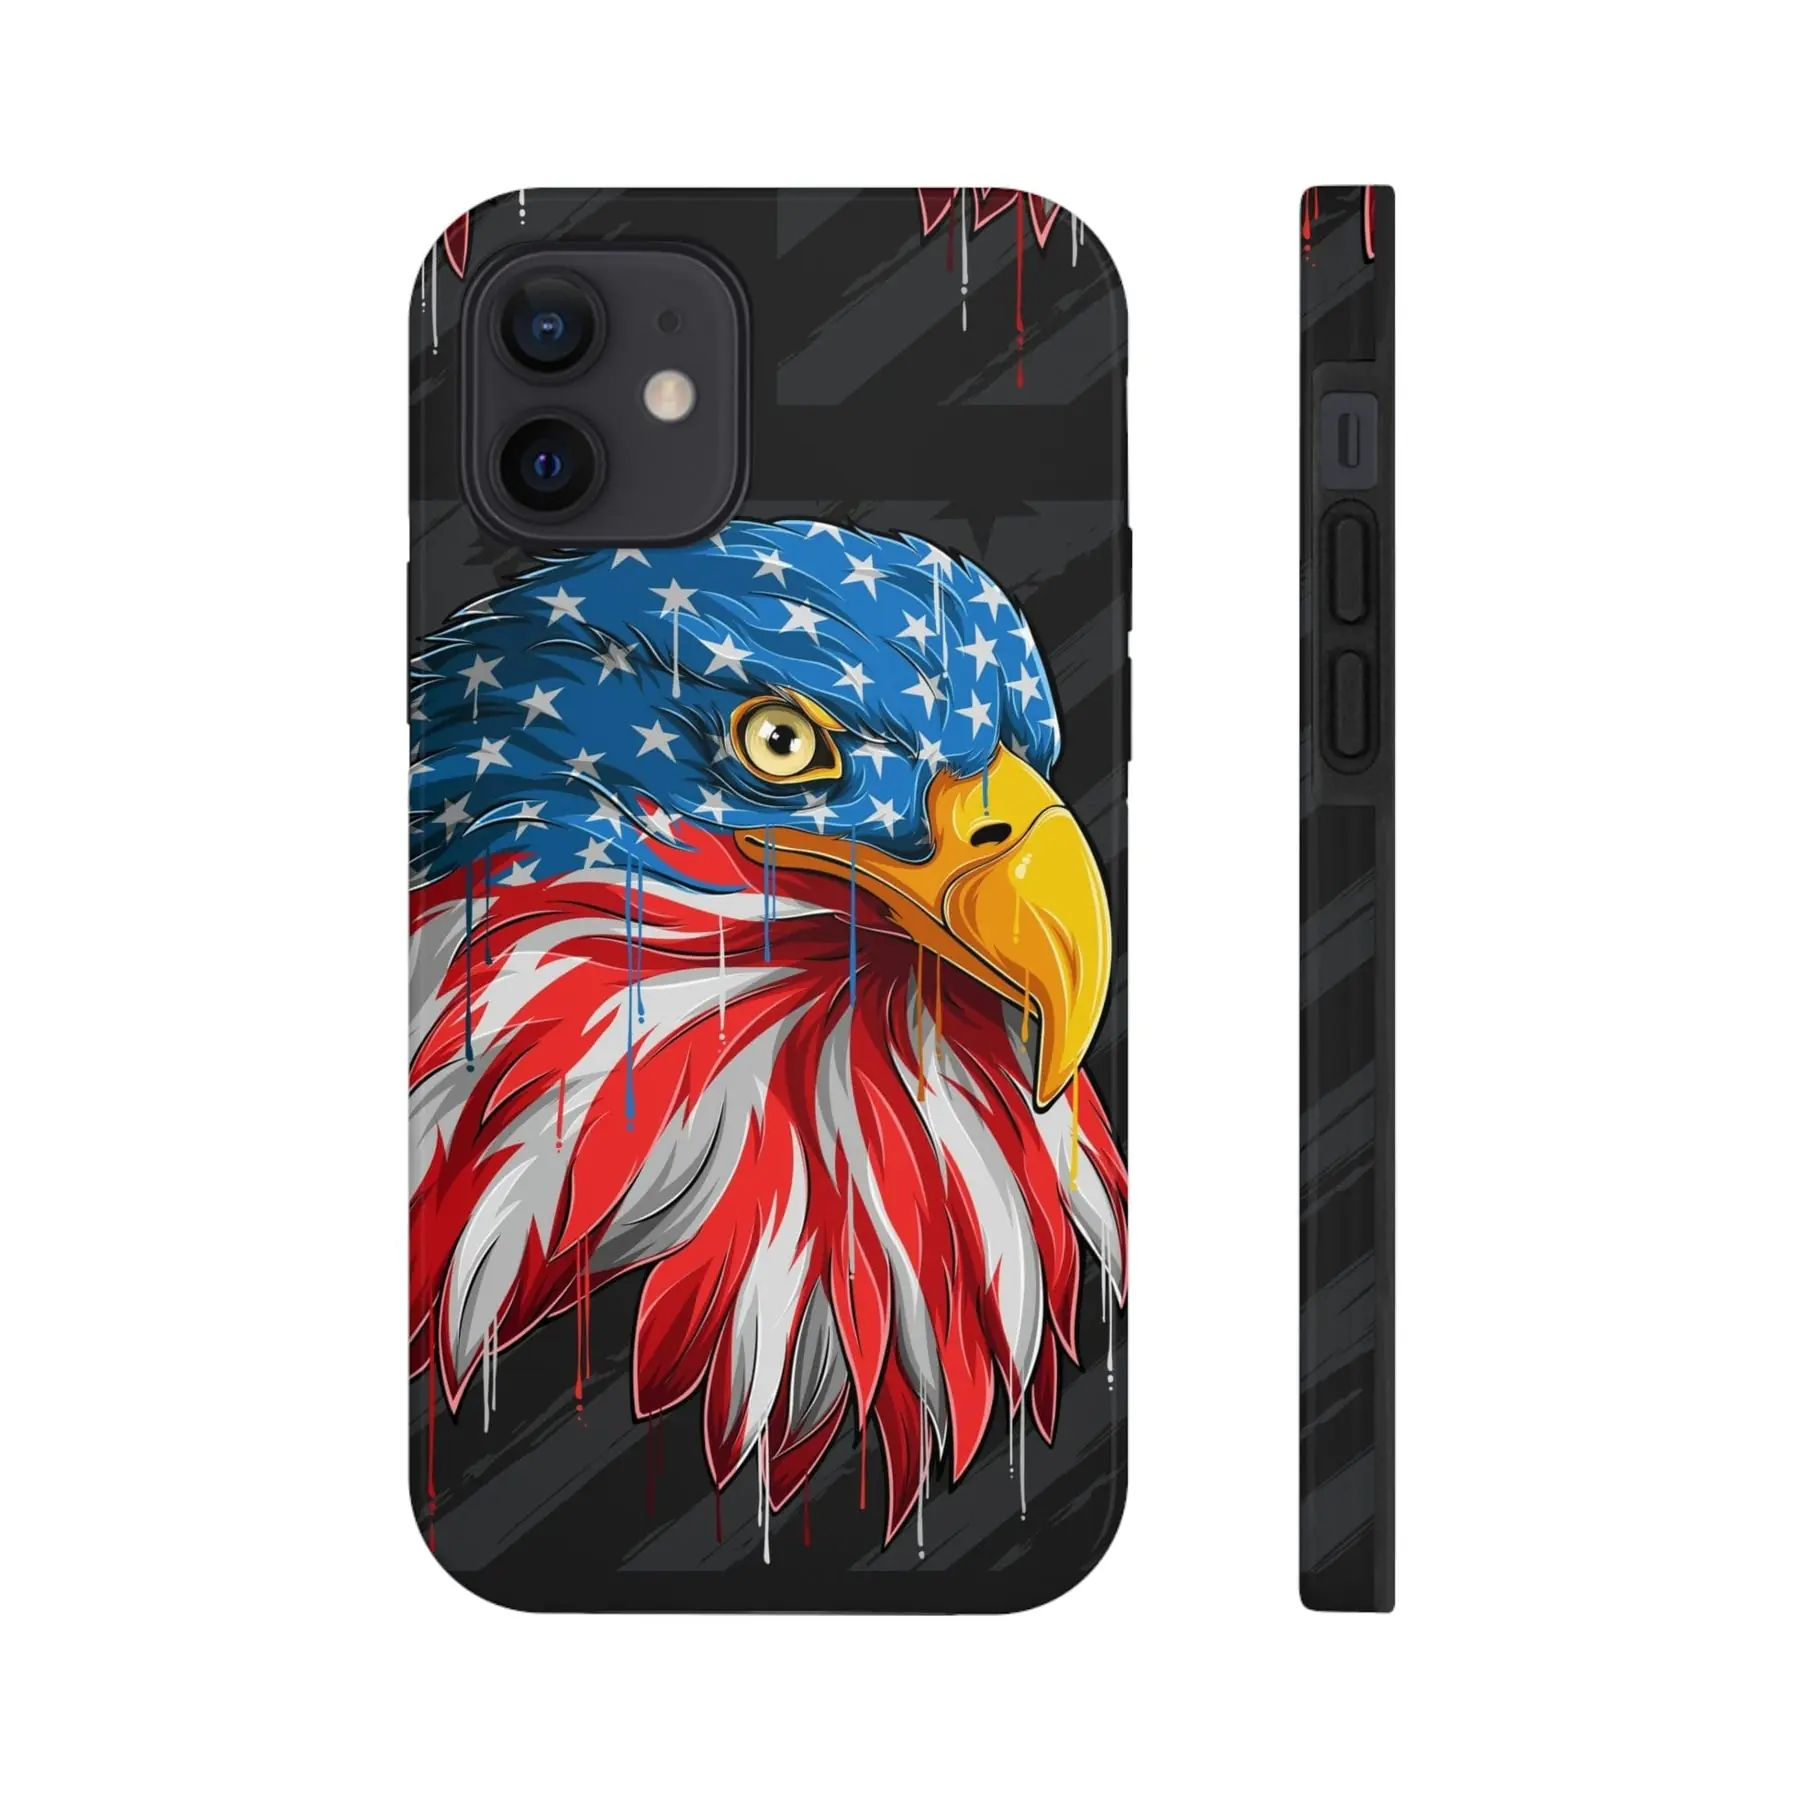 IPhone 14, 13, 12 Series Tough TitanGuard By Case-Mate® - American Eagle